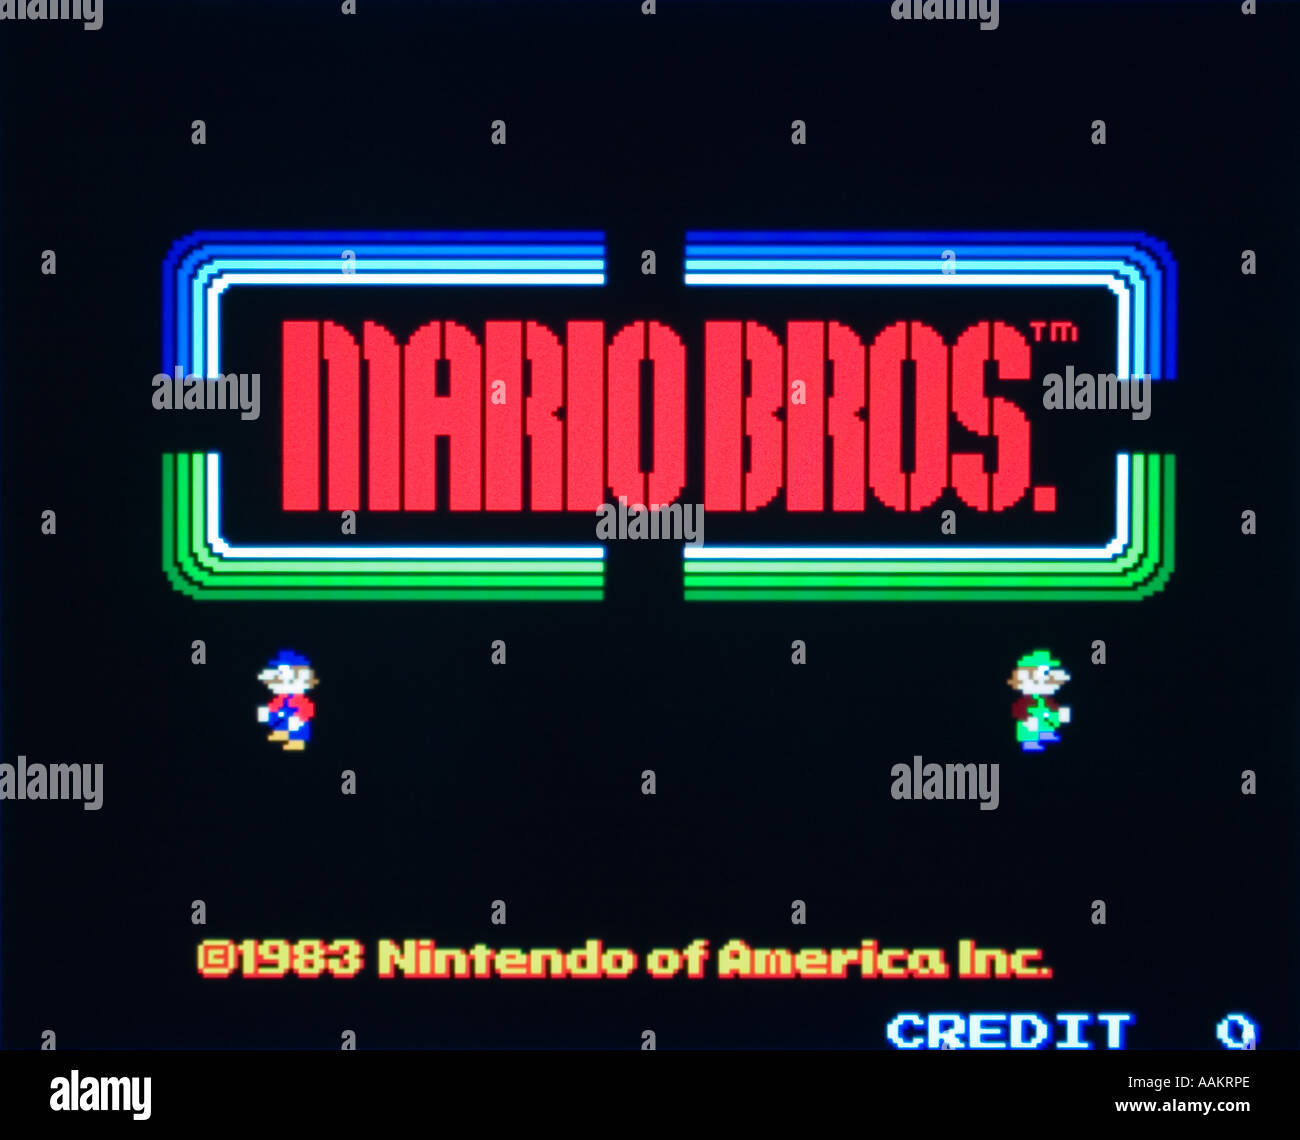 Mario Bros Nintendo of America 1983 vintage arcade videogame screenshot -  EDITORIAL USE ONLY Stock Photo - Alamy